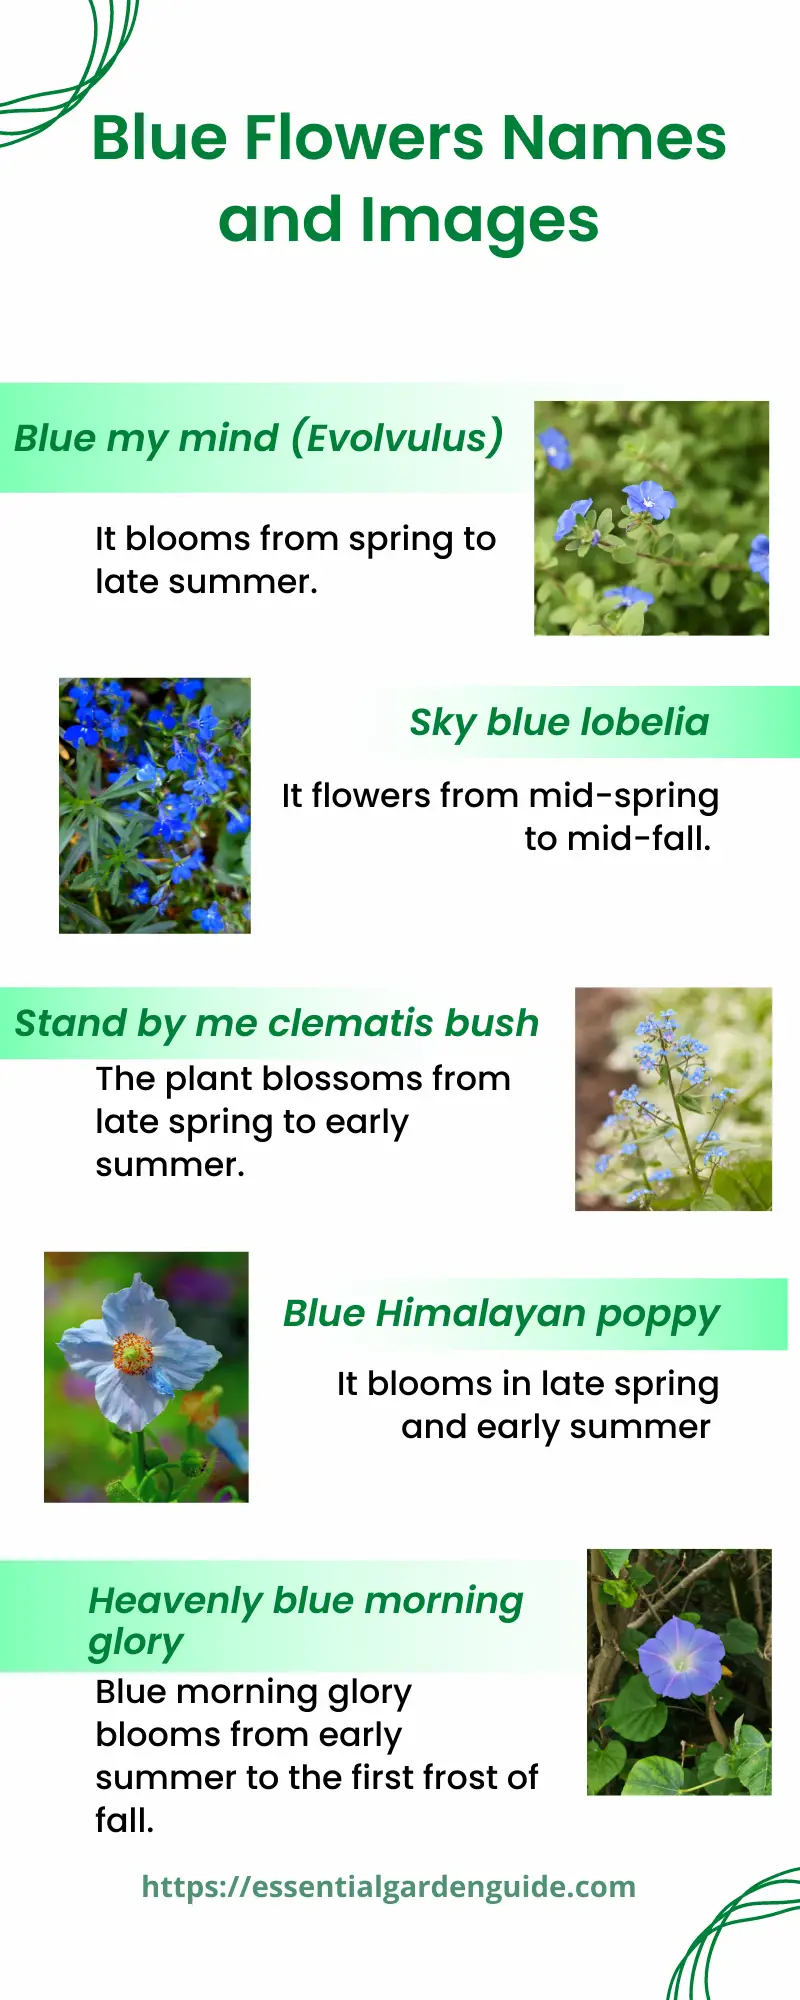 What do blue flowers symbolize?